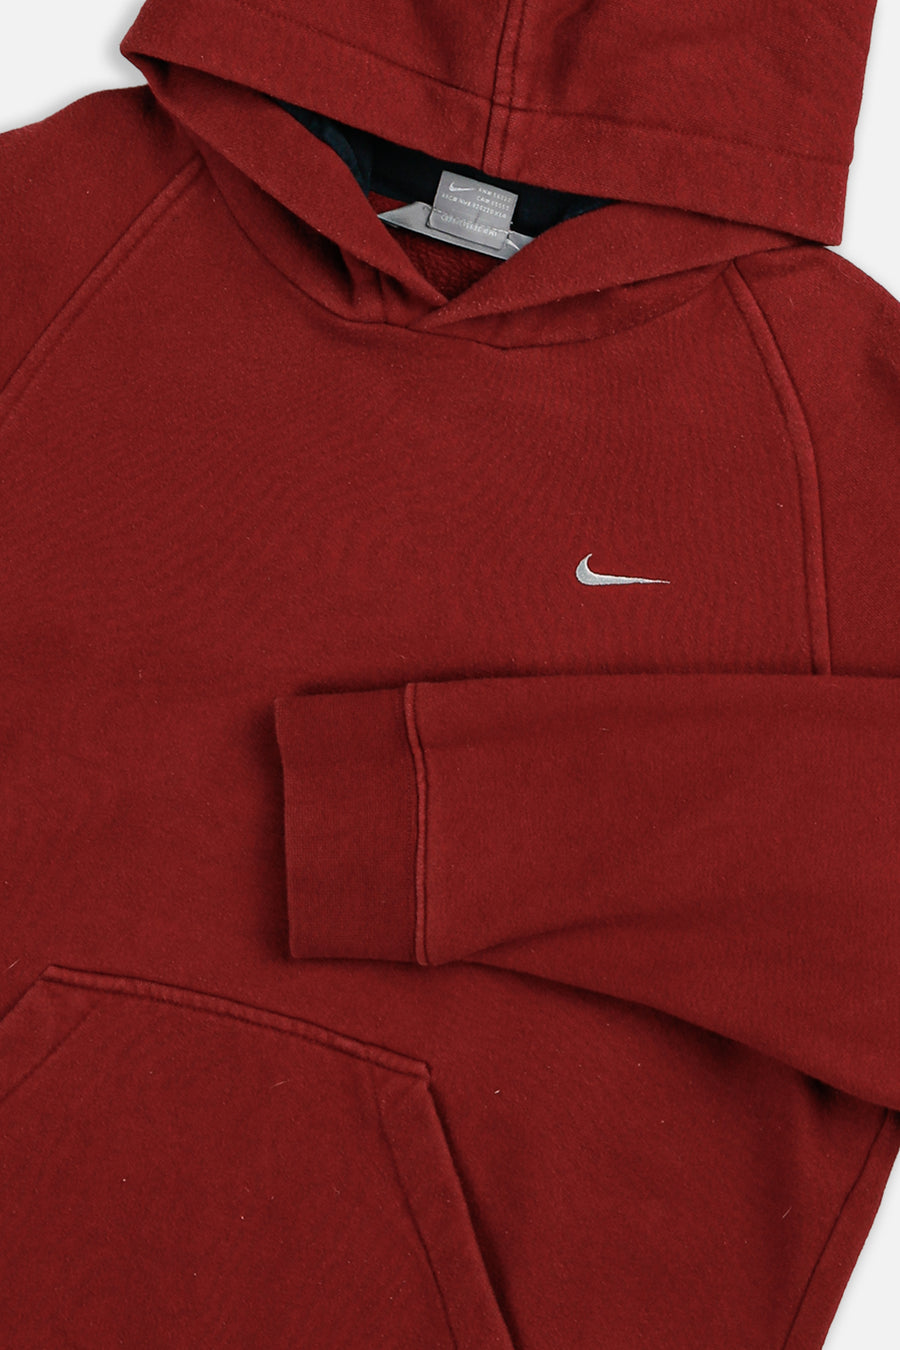 Vintage Nike Sweatshirt - S